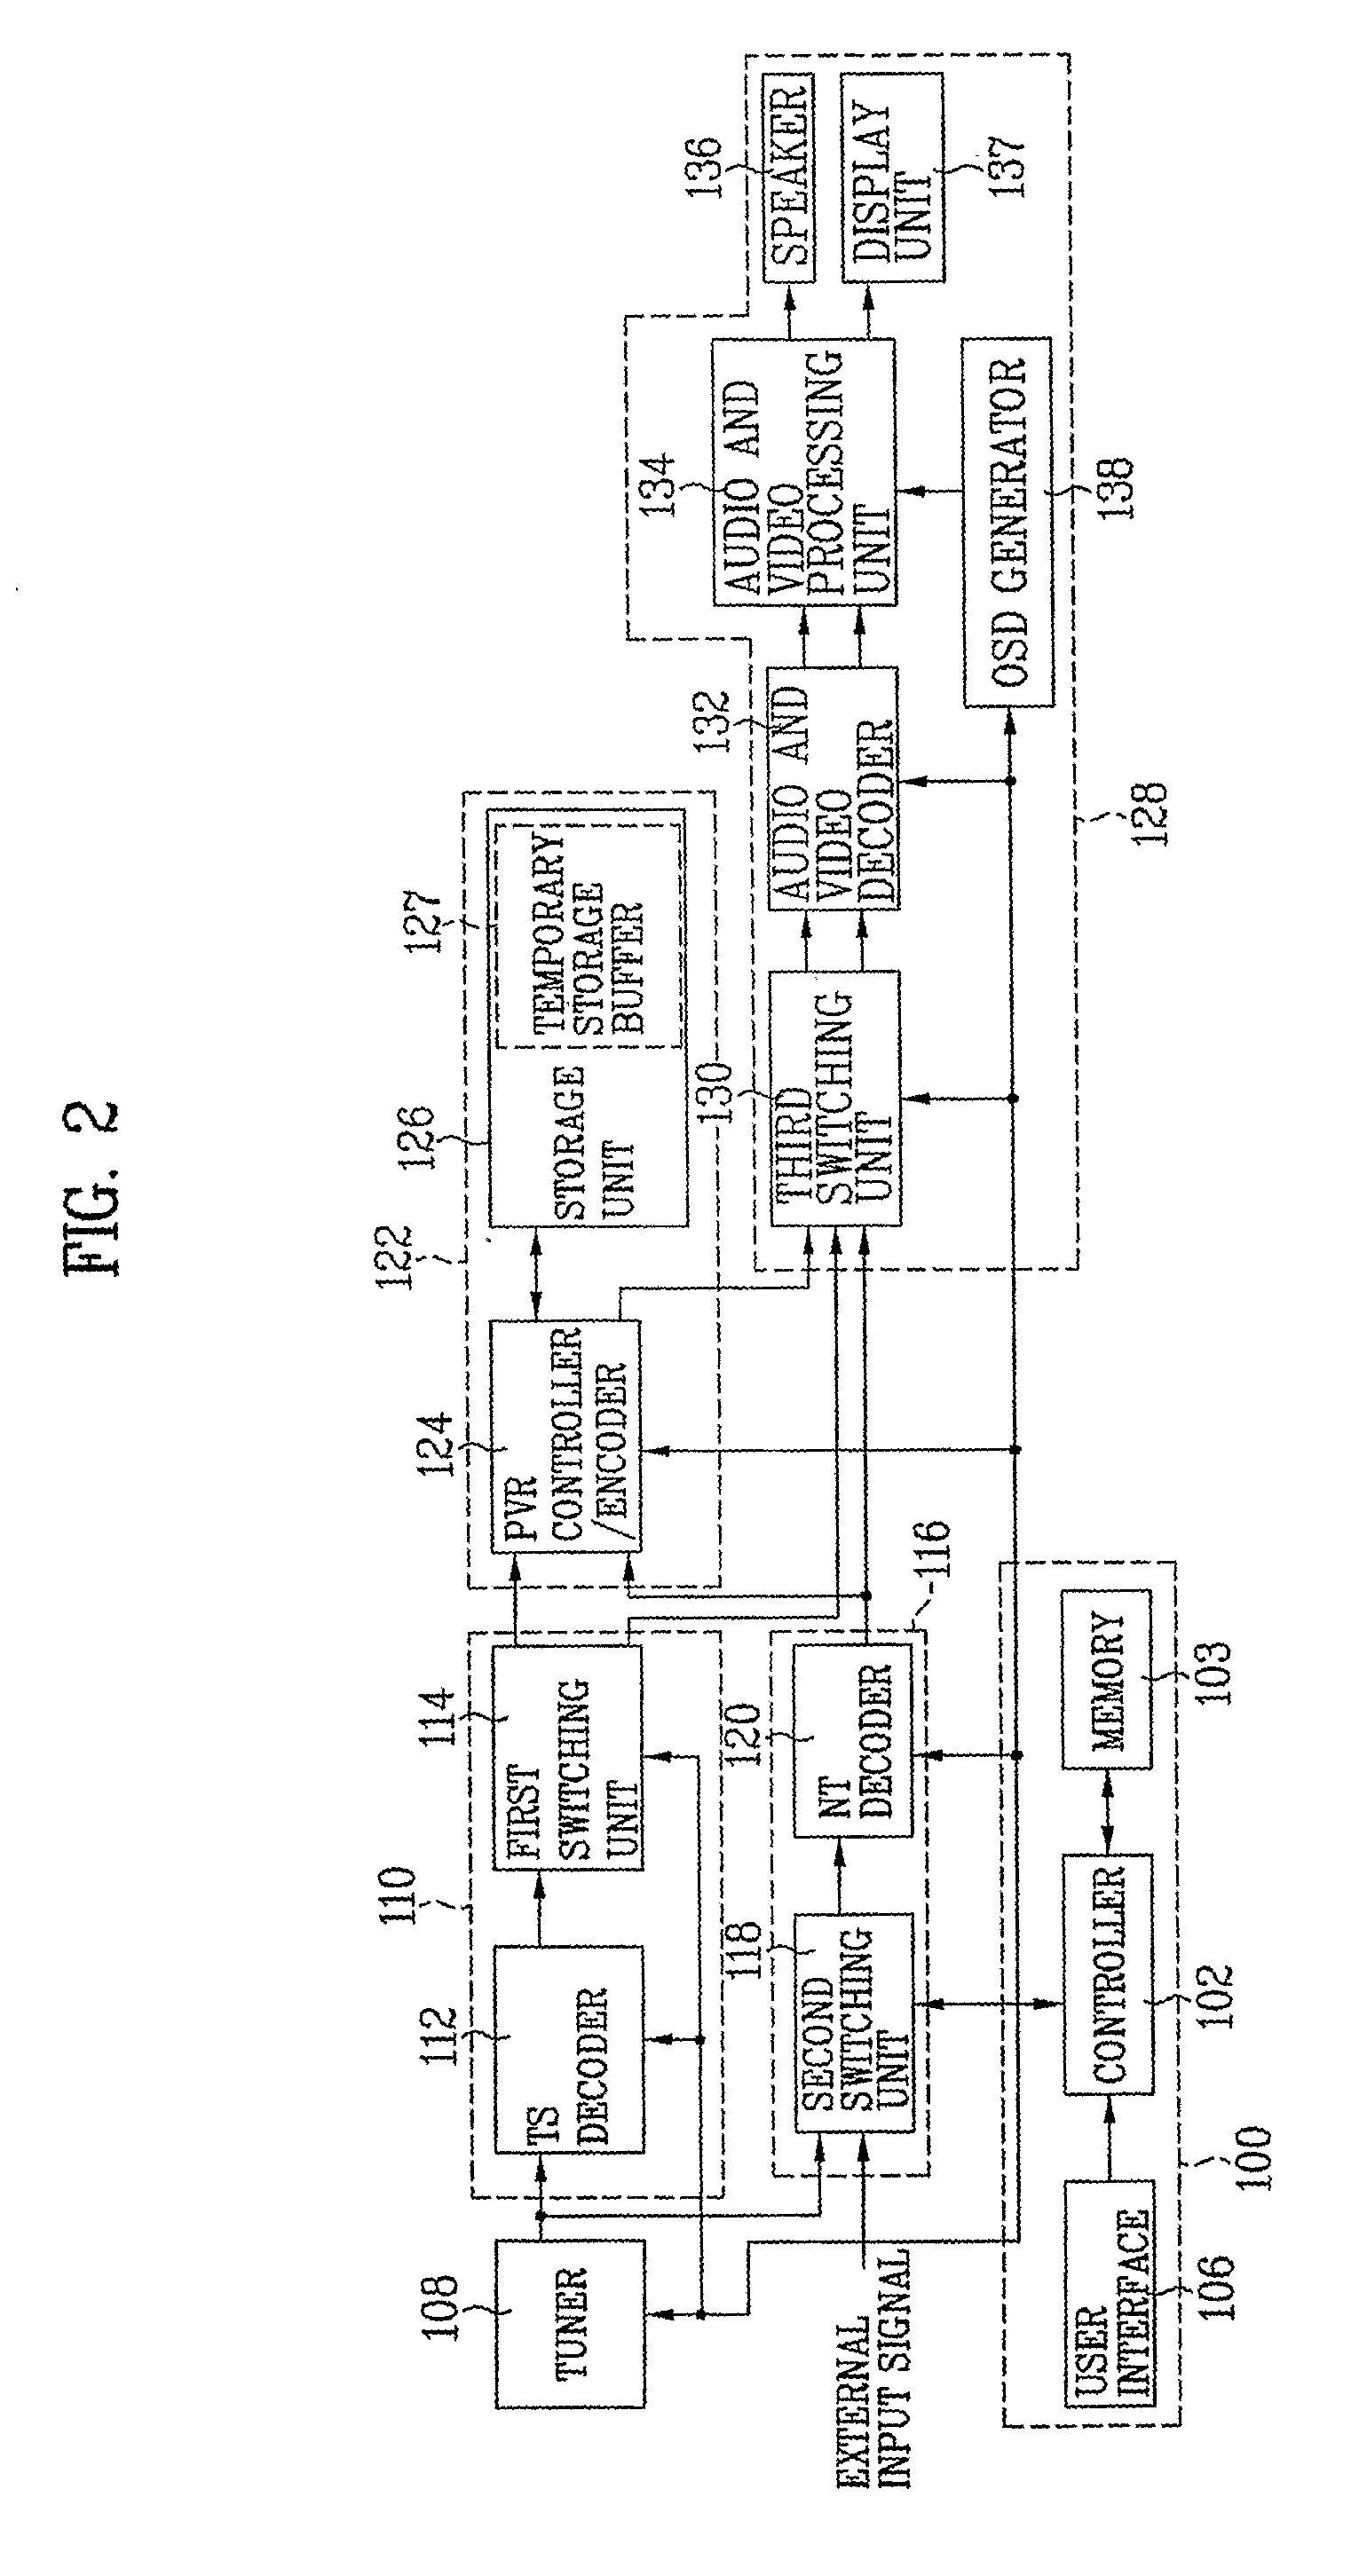 Image signal receiver and method of displaying progress bars